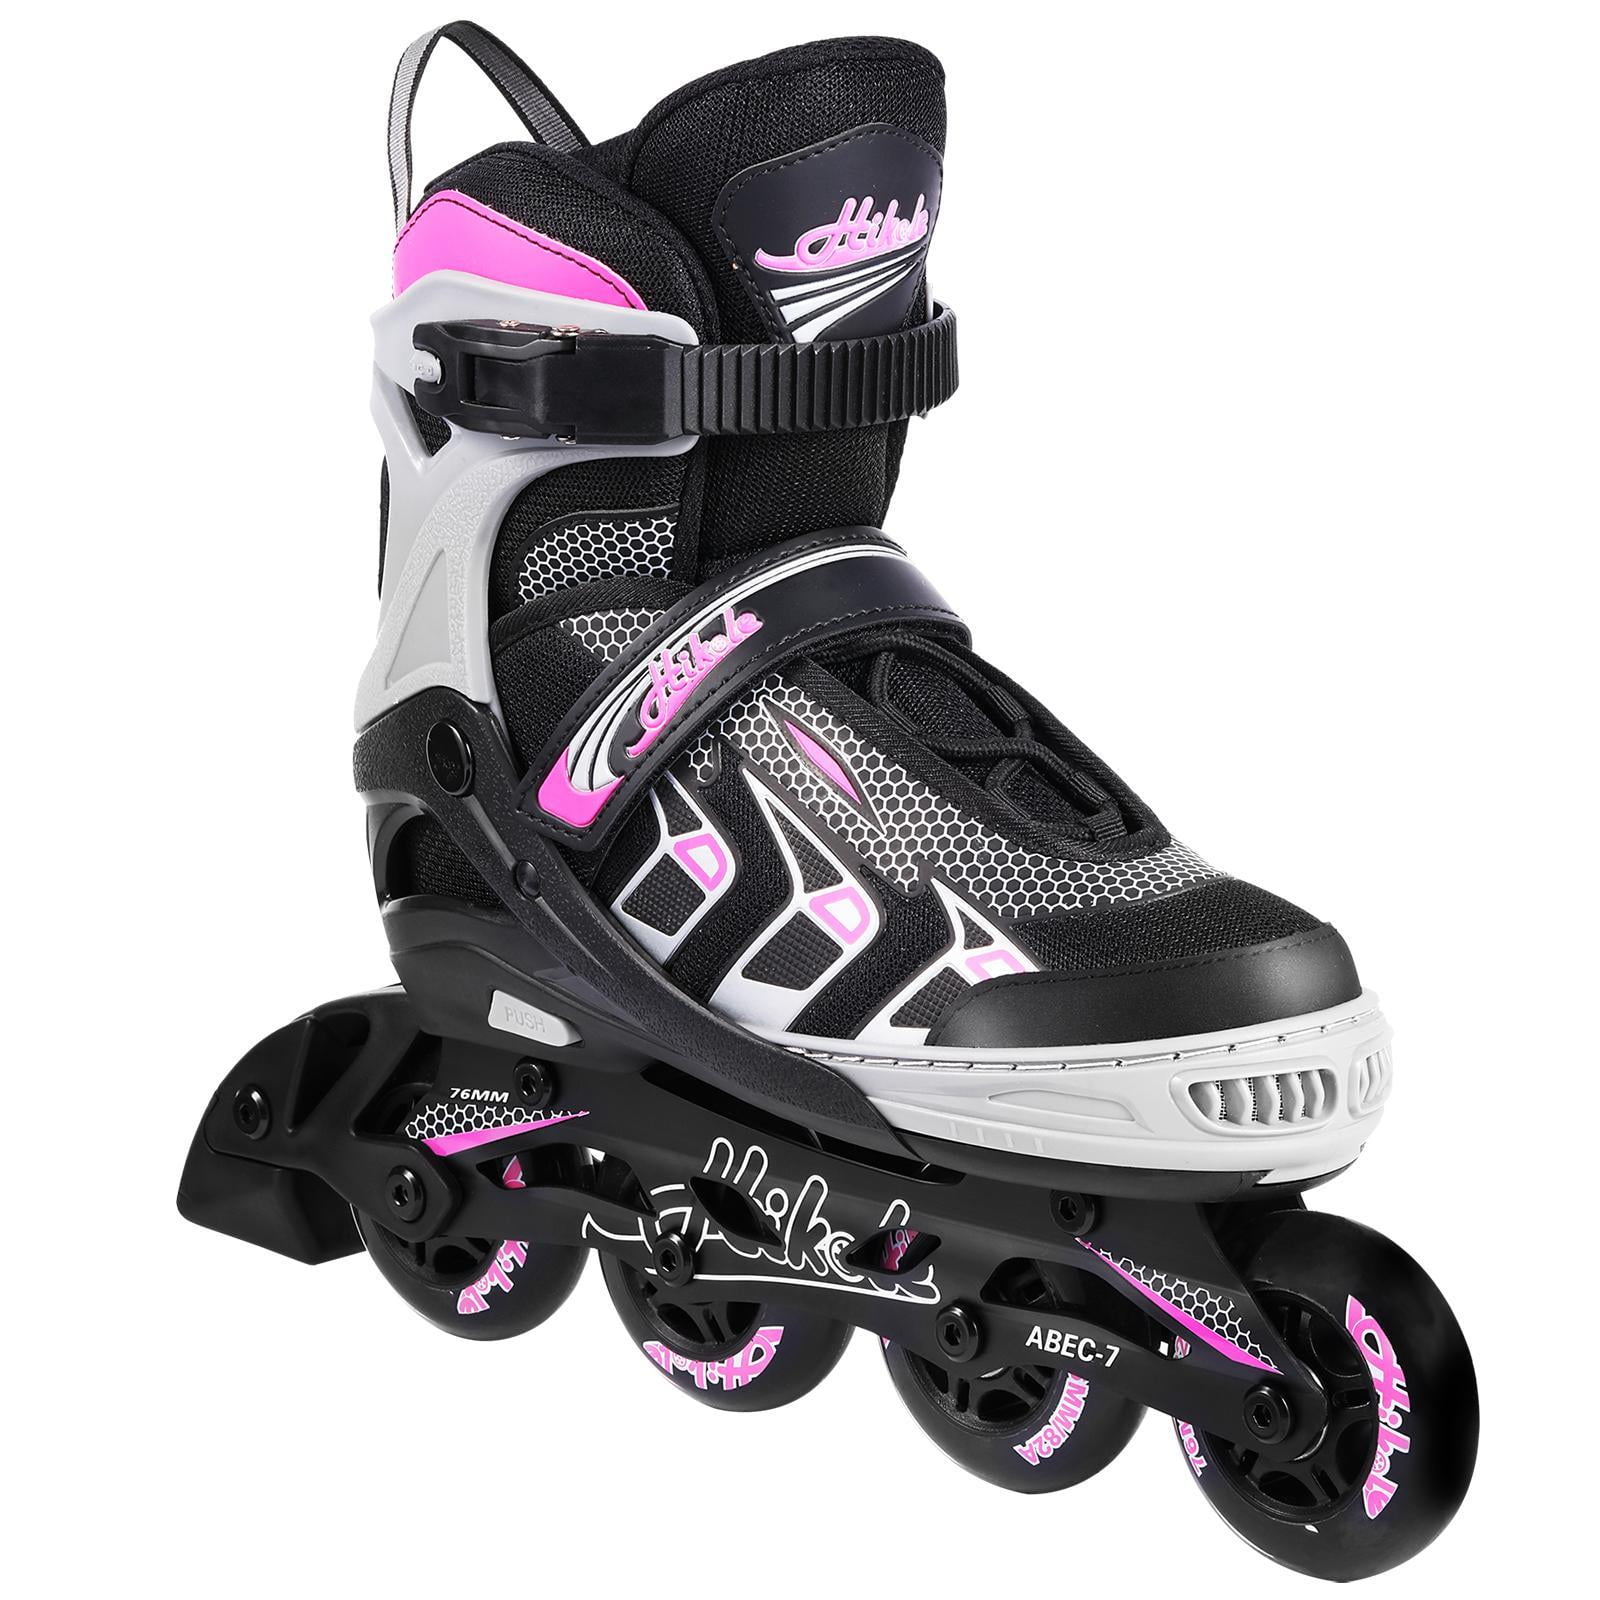 Details about   Adjustable Inline Skates Roller Blades Adult or Kid Breathable Outdoor c 100 